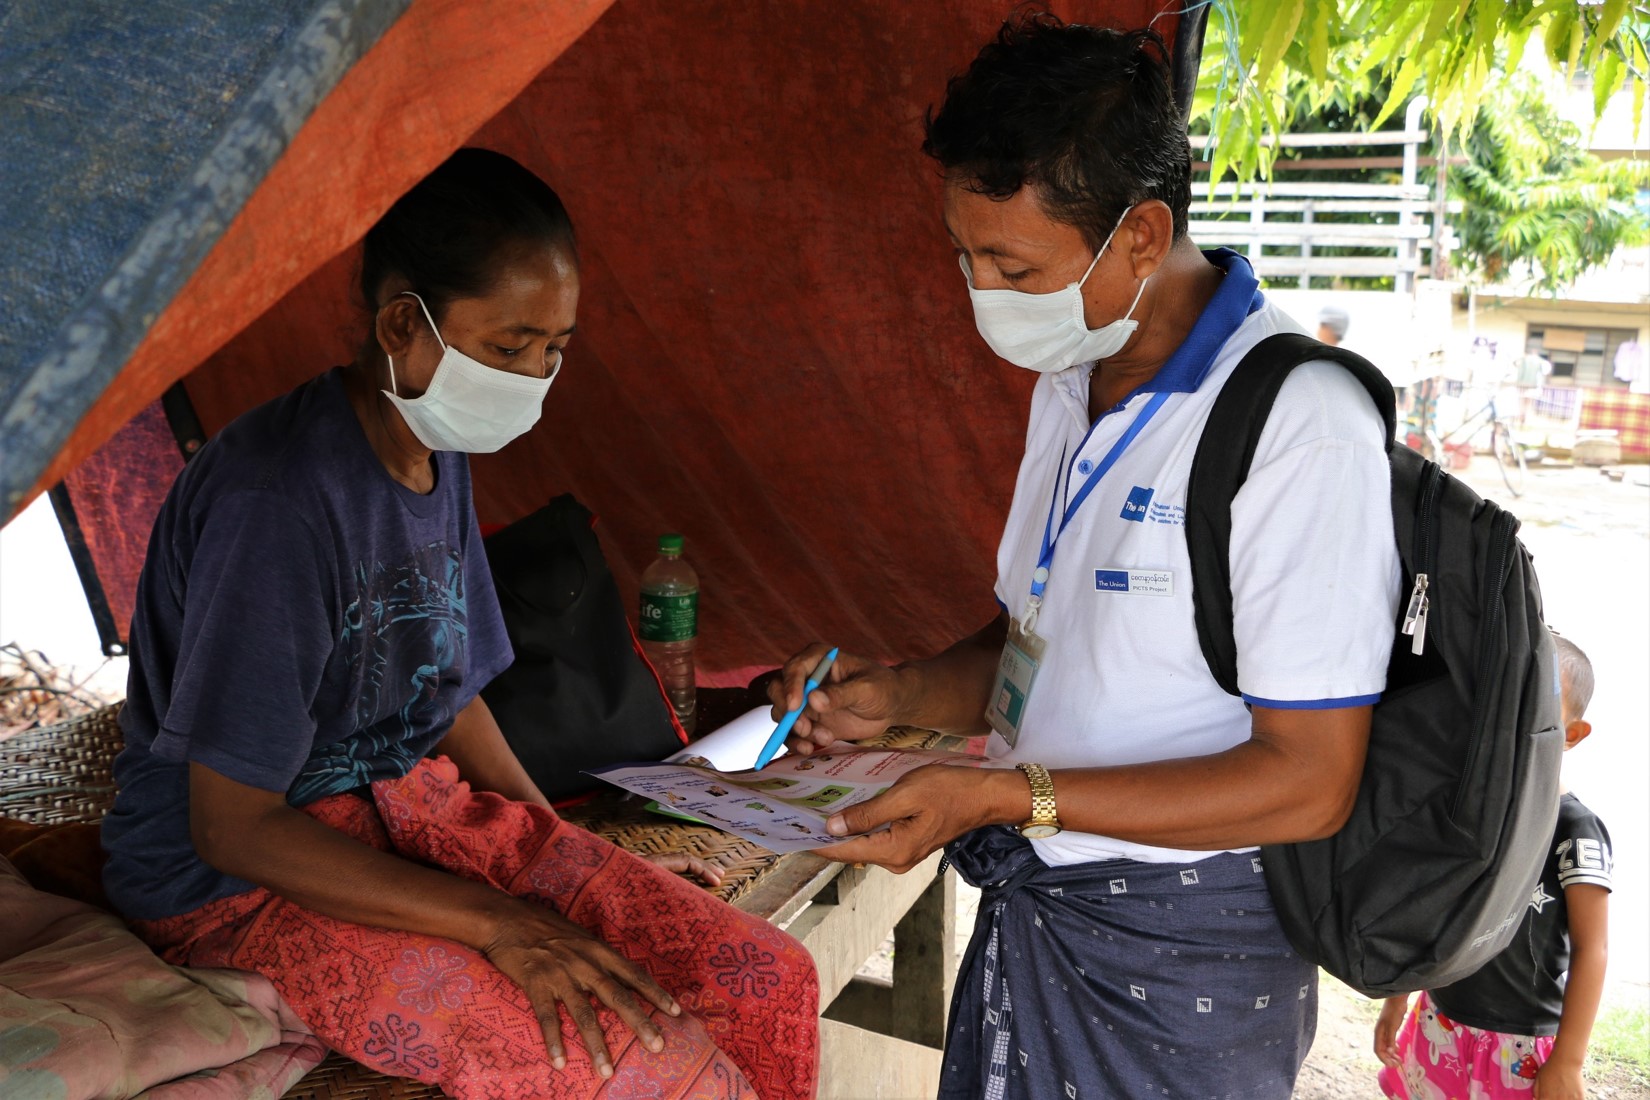 A volunteer is providing TB health education in slum area